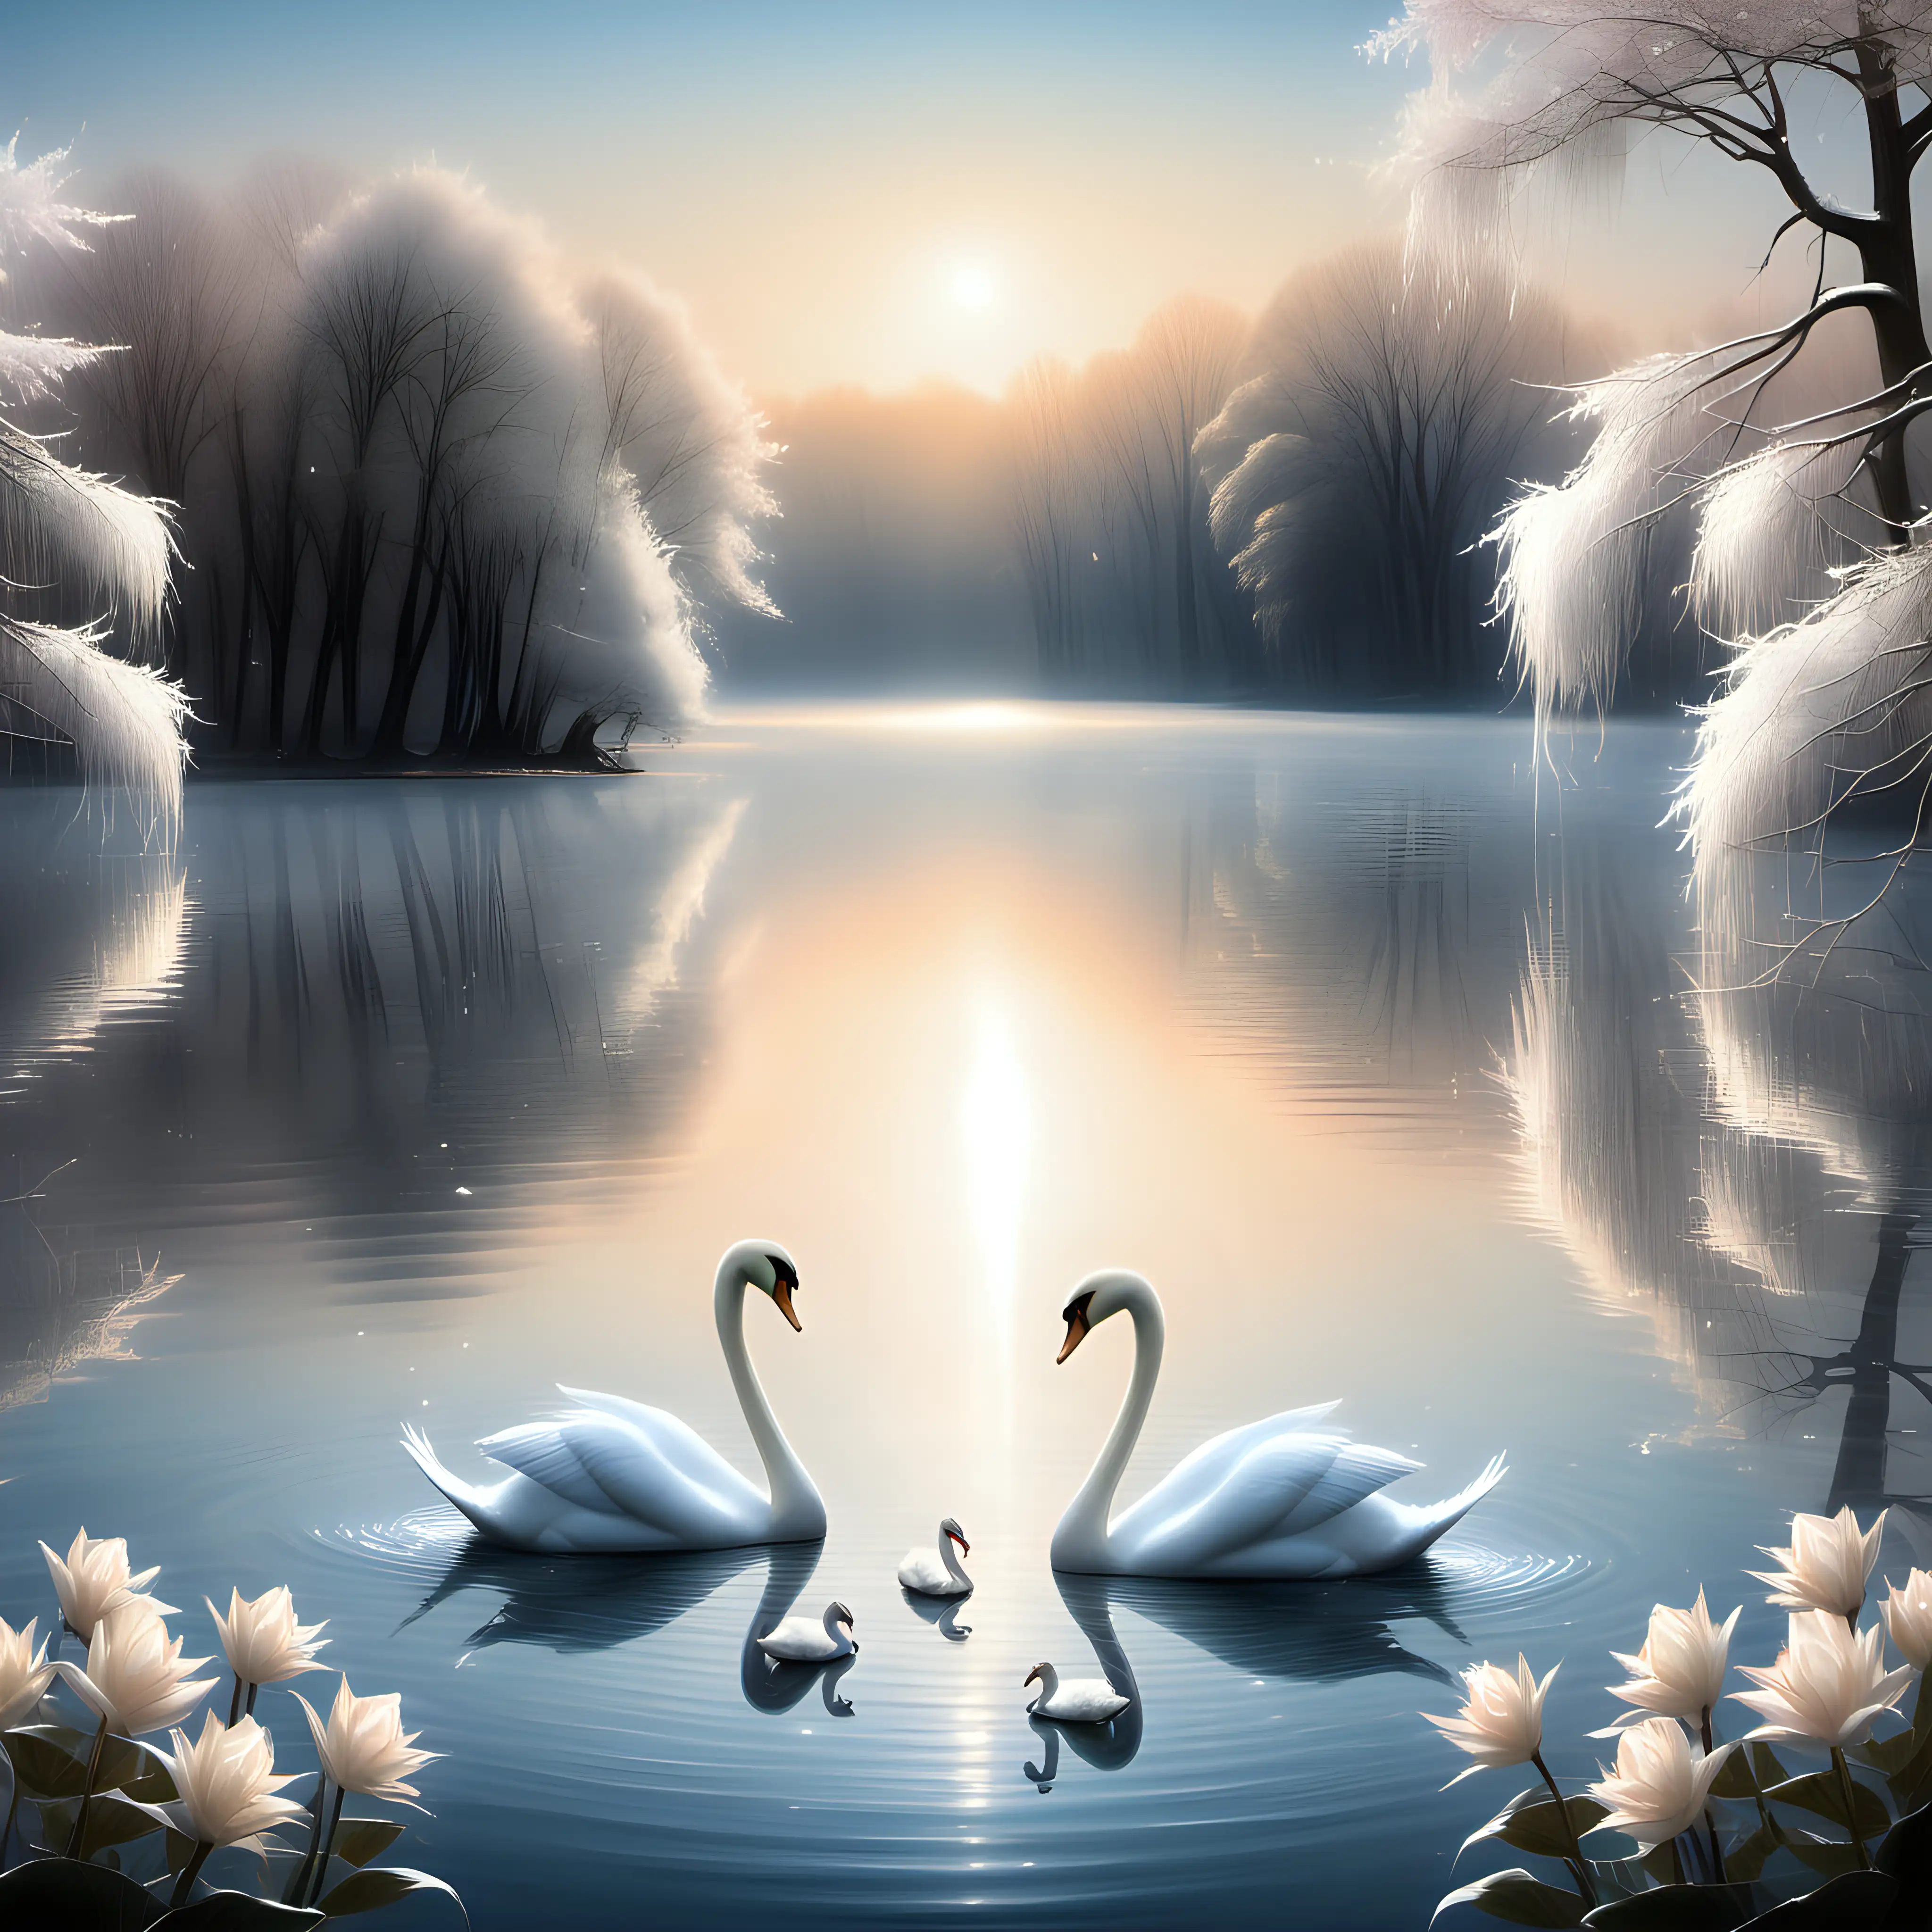 Serene Scene Glistening Lake with Graceful Swans